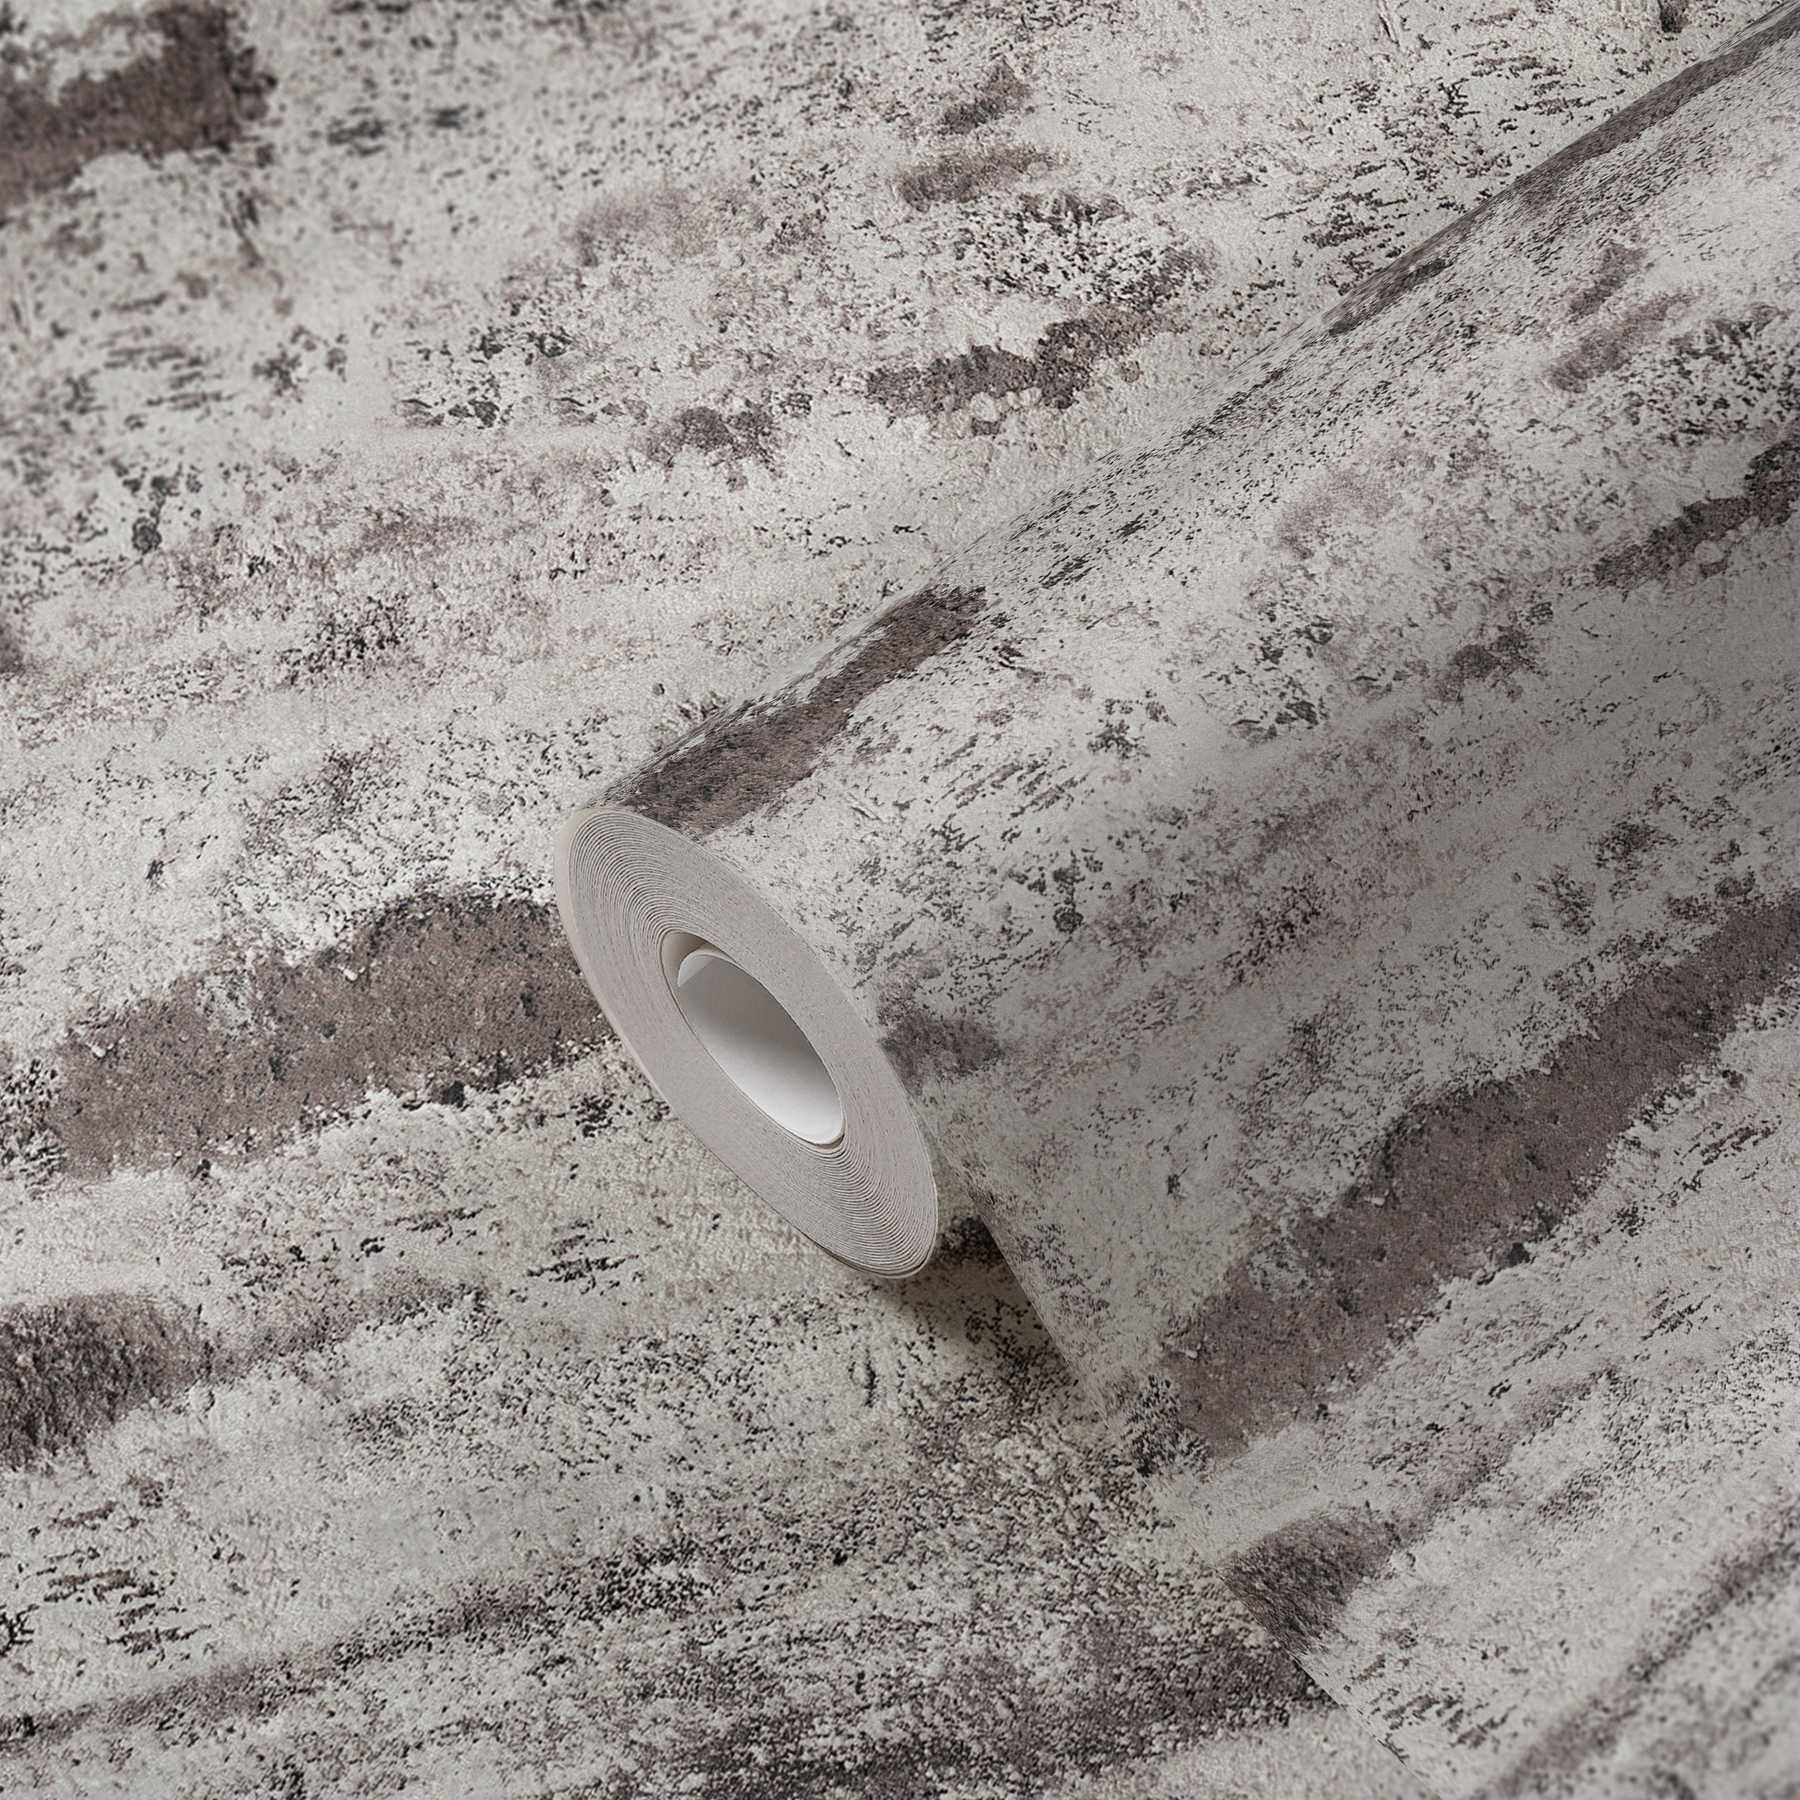             Non-woven wallpaper rustic pattern, plaster look - grey, black
        